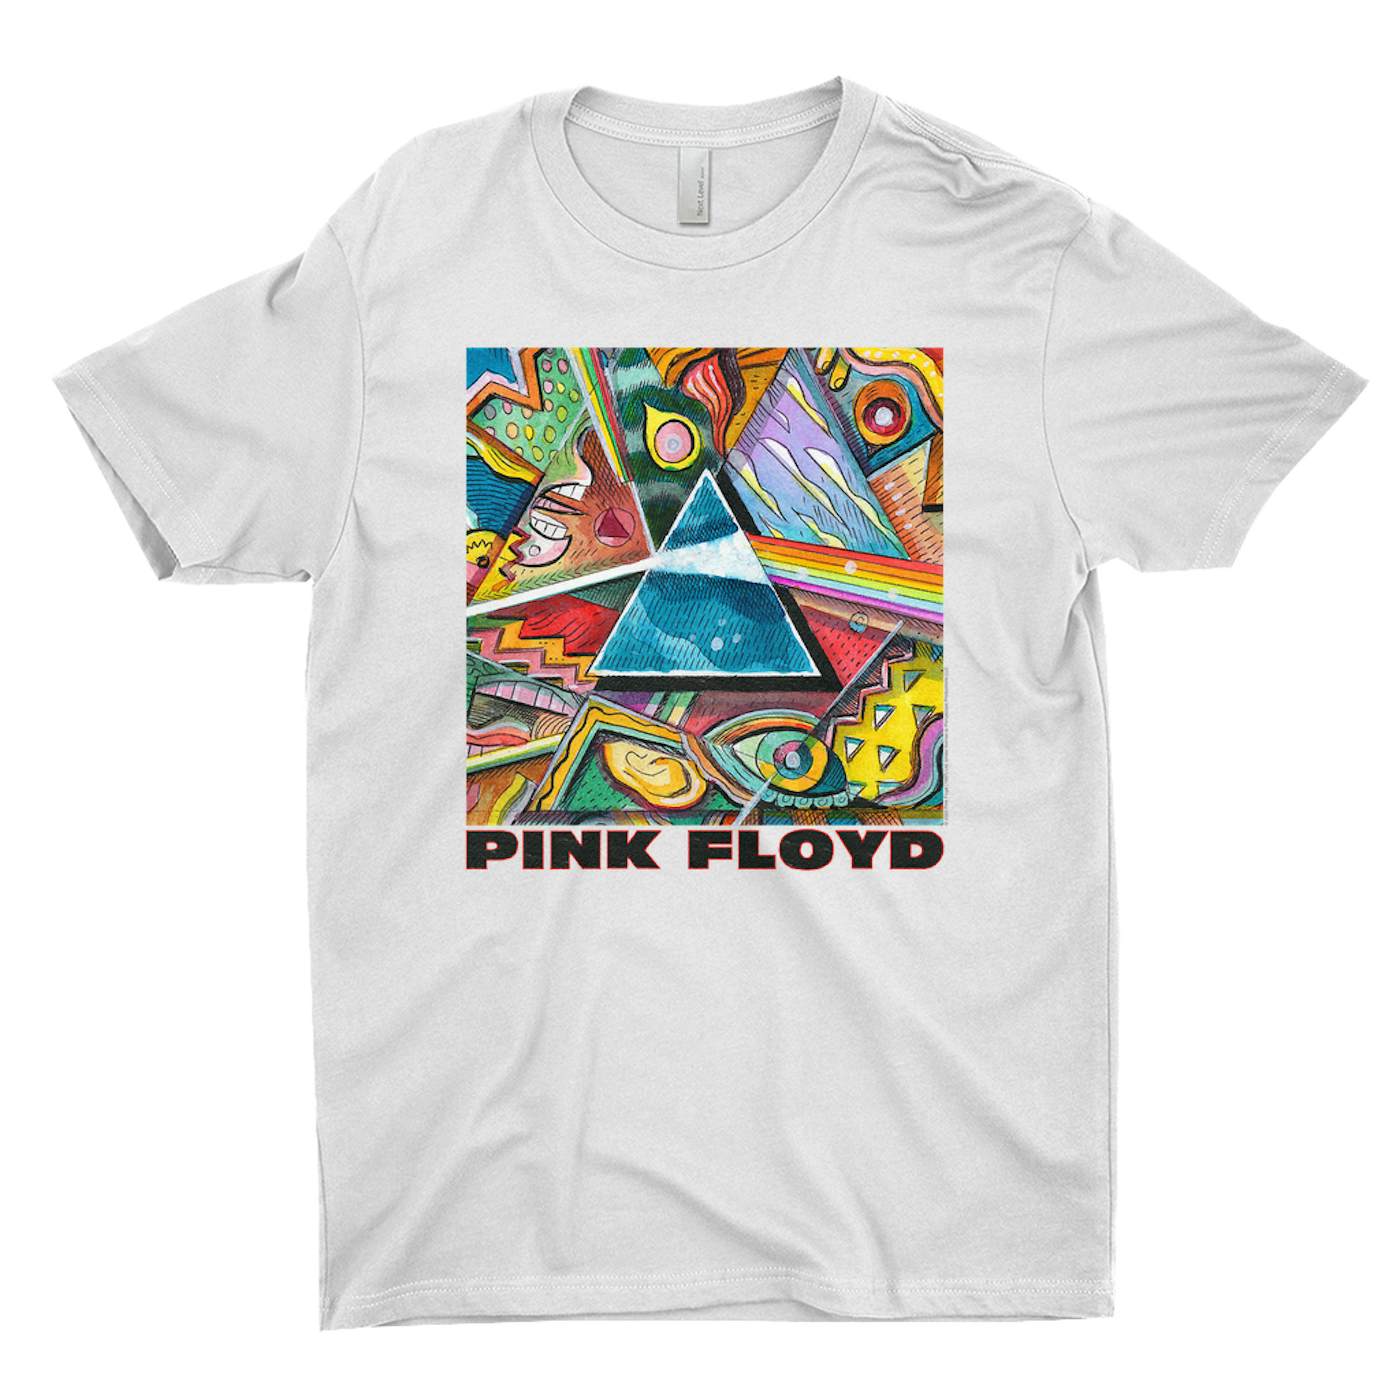 Pink Floyd T-Shirt | Picasso Prism Artwork Pink Floyd Shirt